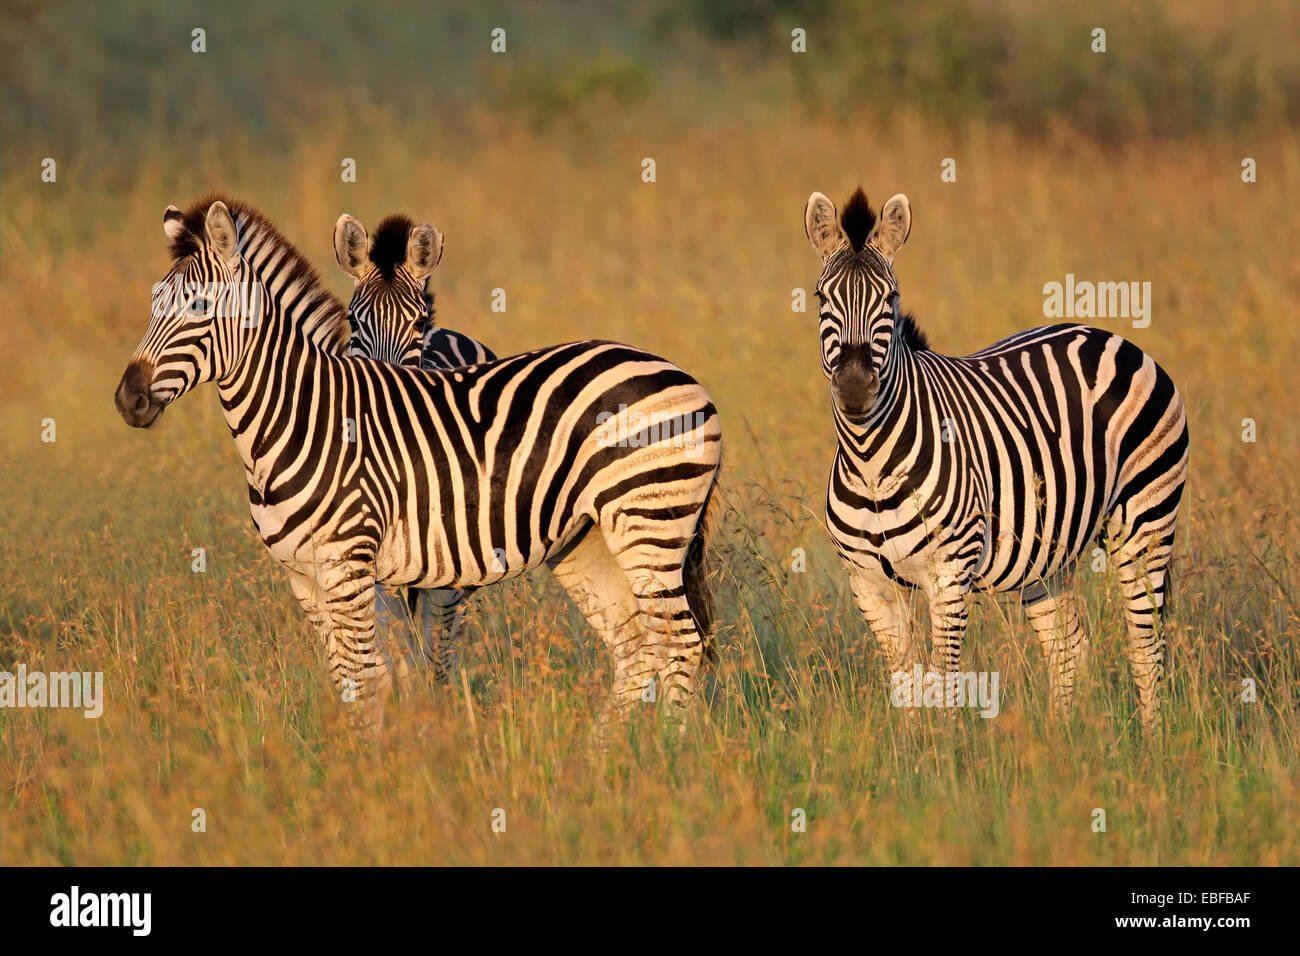 Plains (Burchells) Zebras (Equus burchelli) in grassland, South Africa Stock Photo